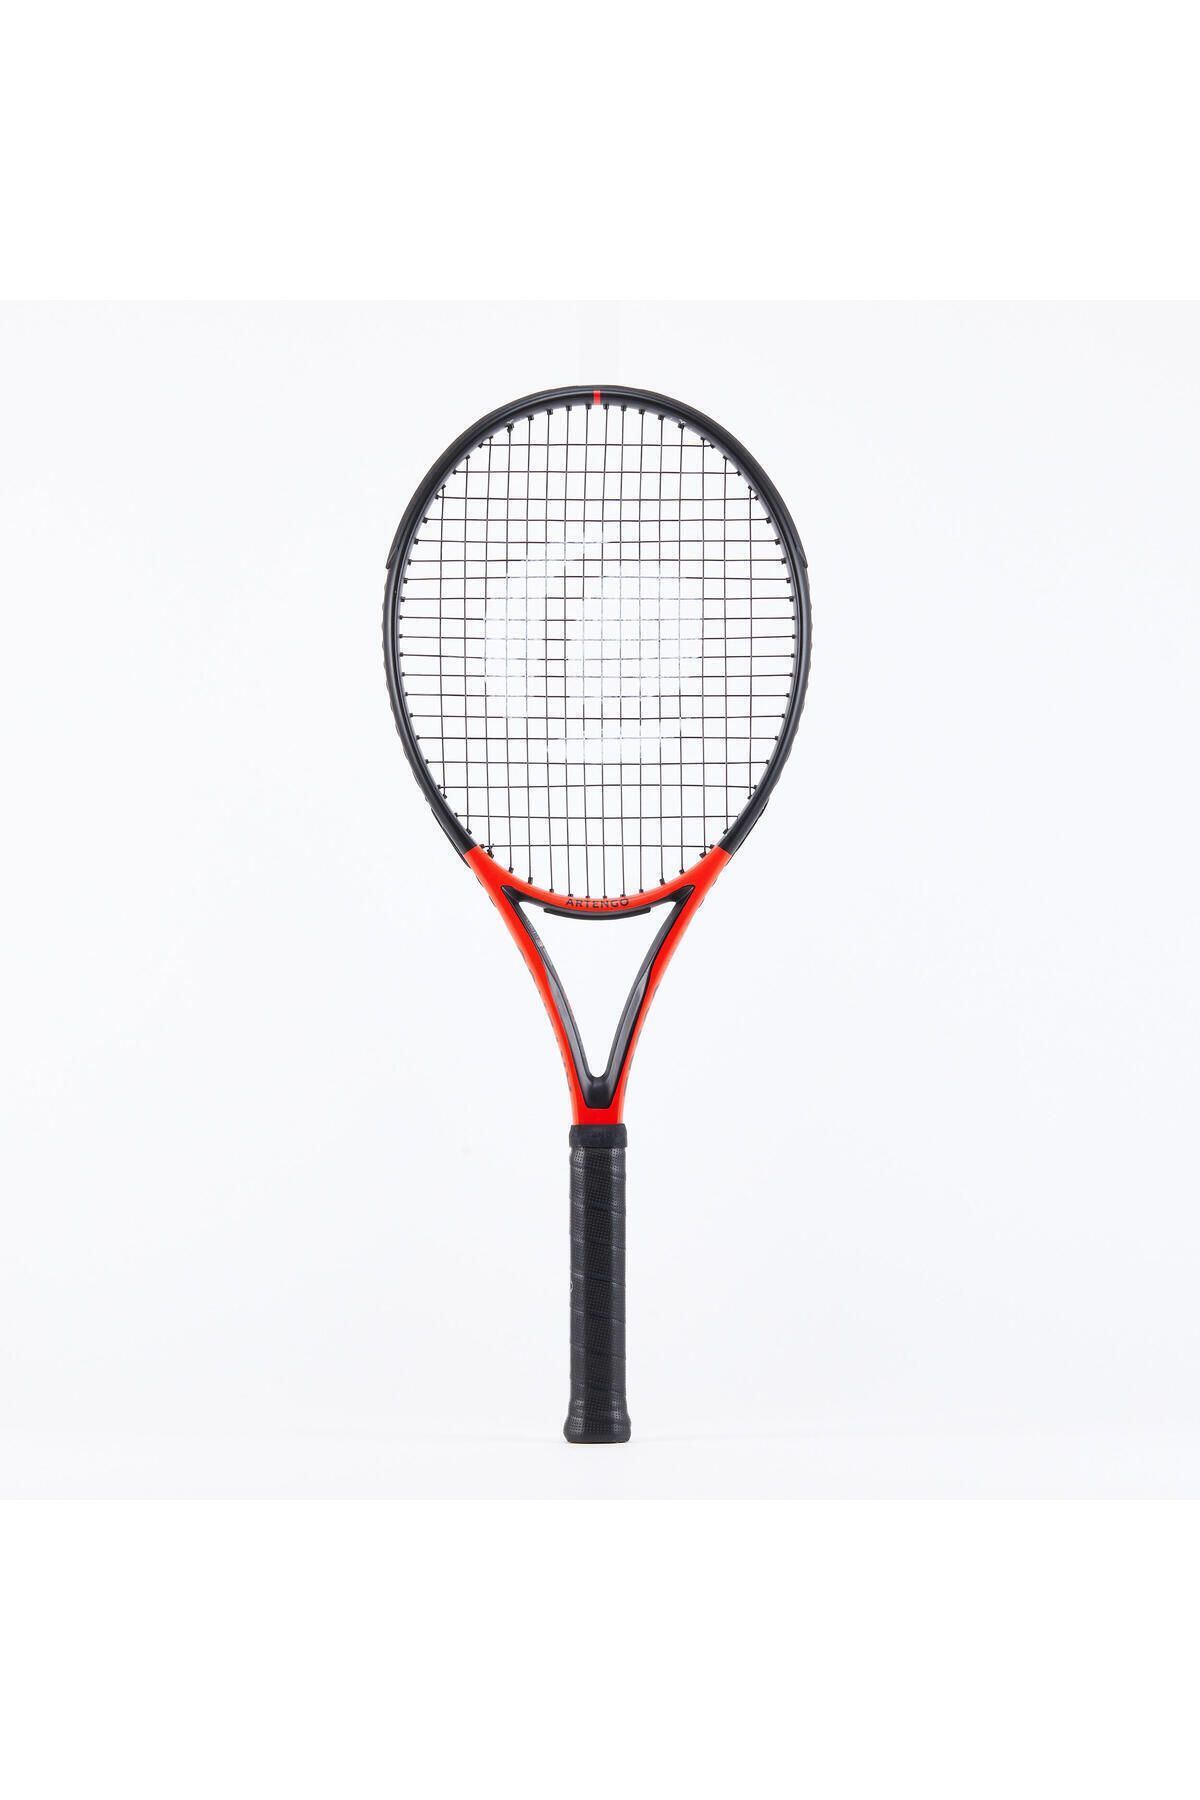 Decathlon Artengo Yetişkin Tenis Raketi - Kırmızı / Siyah - 285 G. - TR990 Power